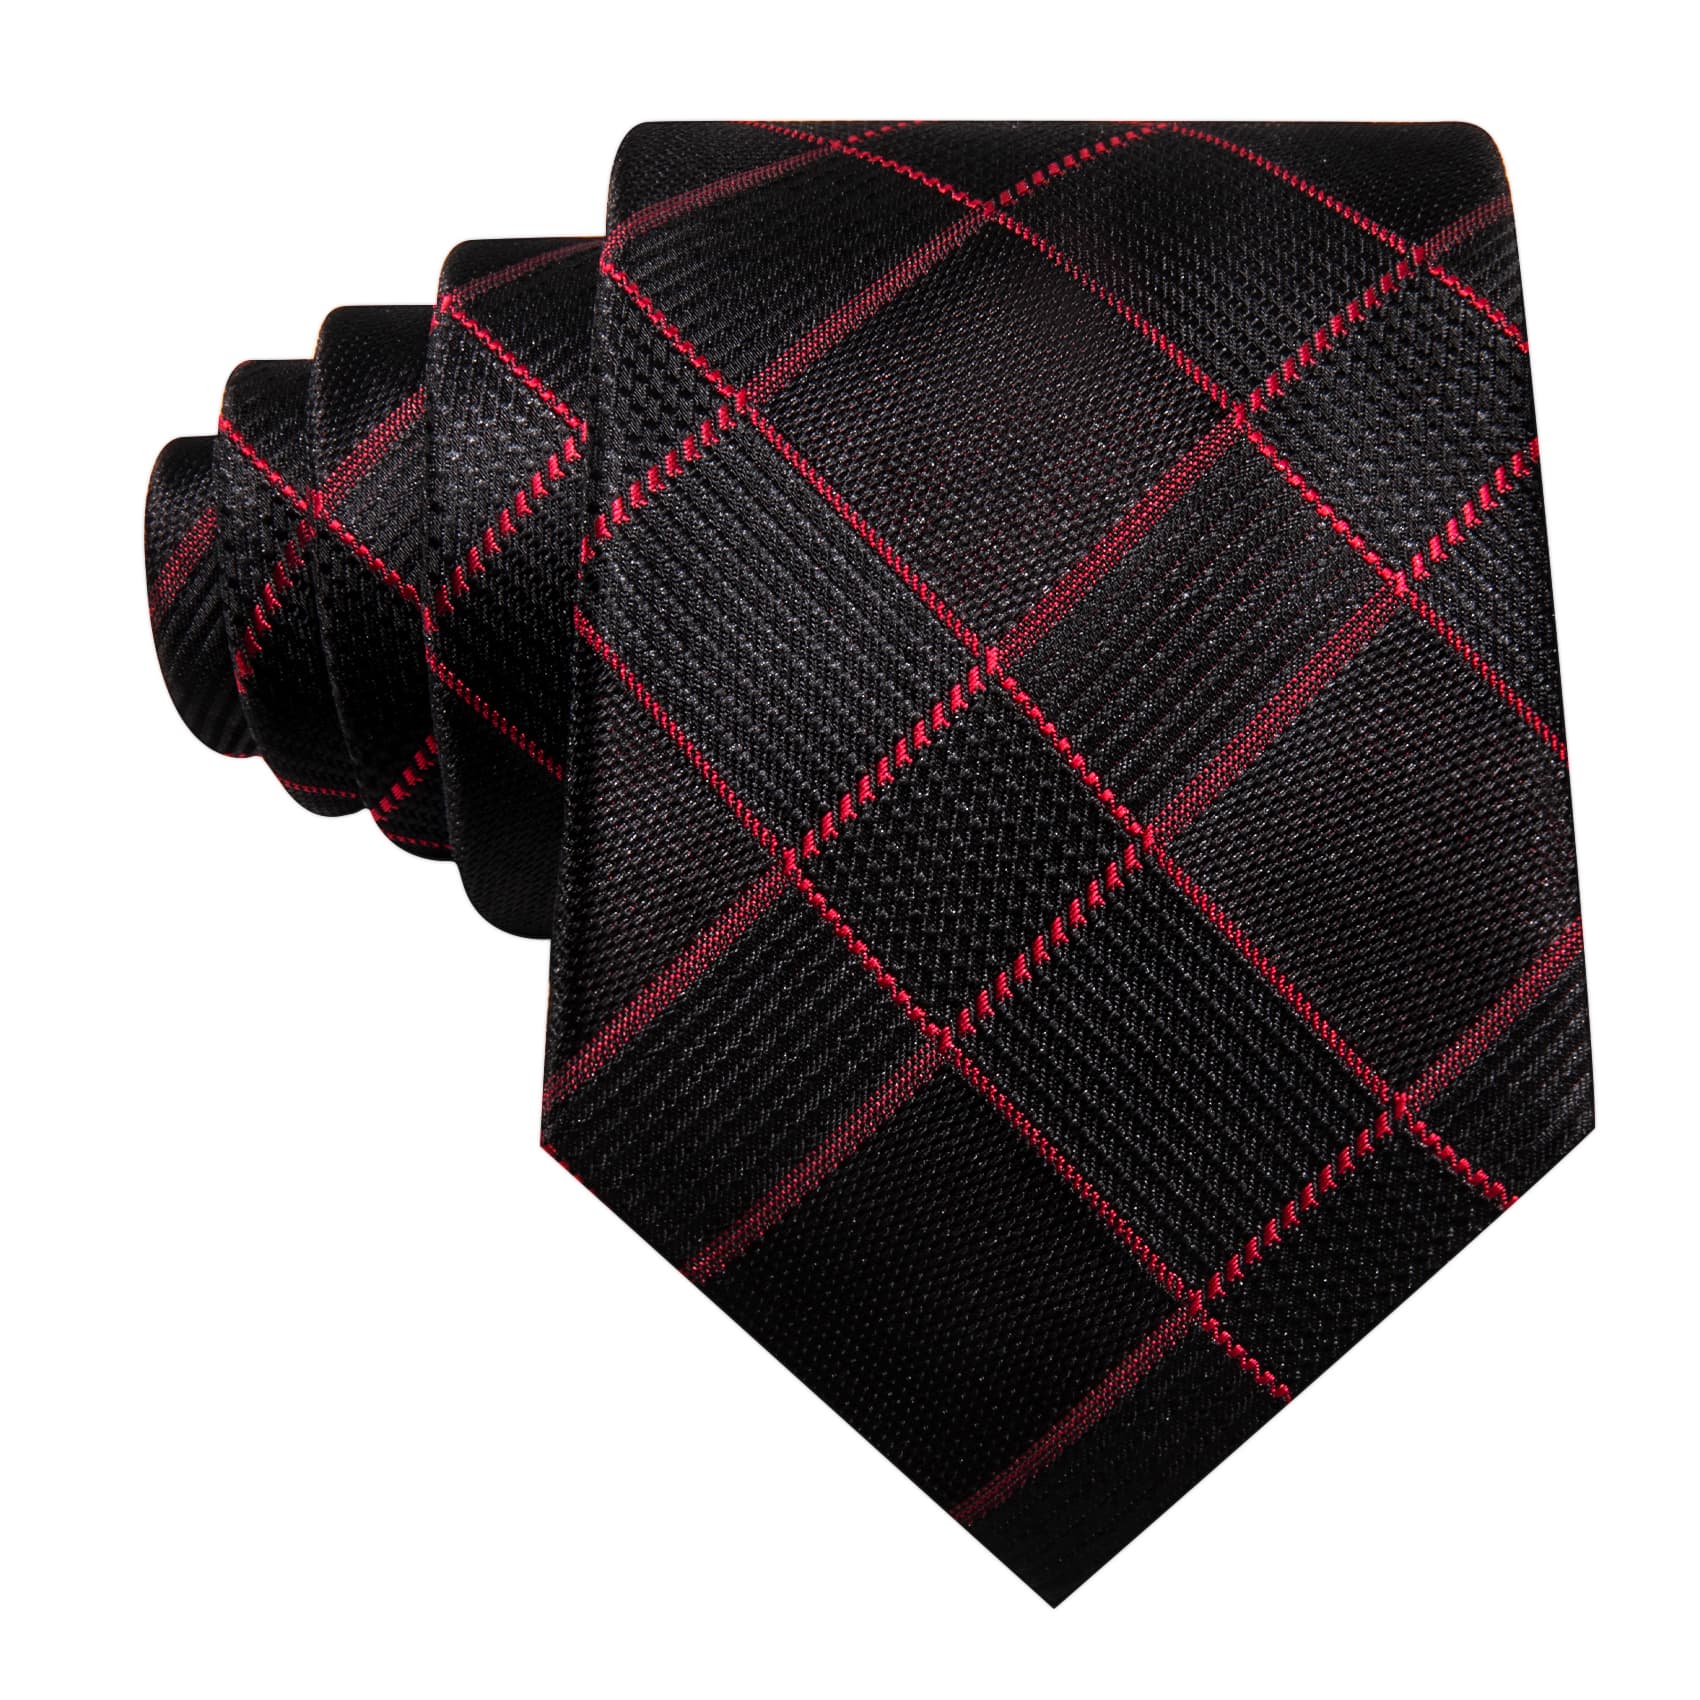  Black Plaid Tie with Red Stripes Men's Business Set